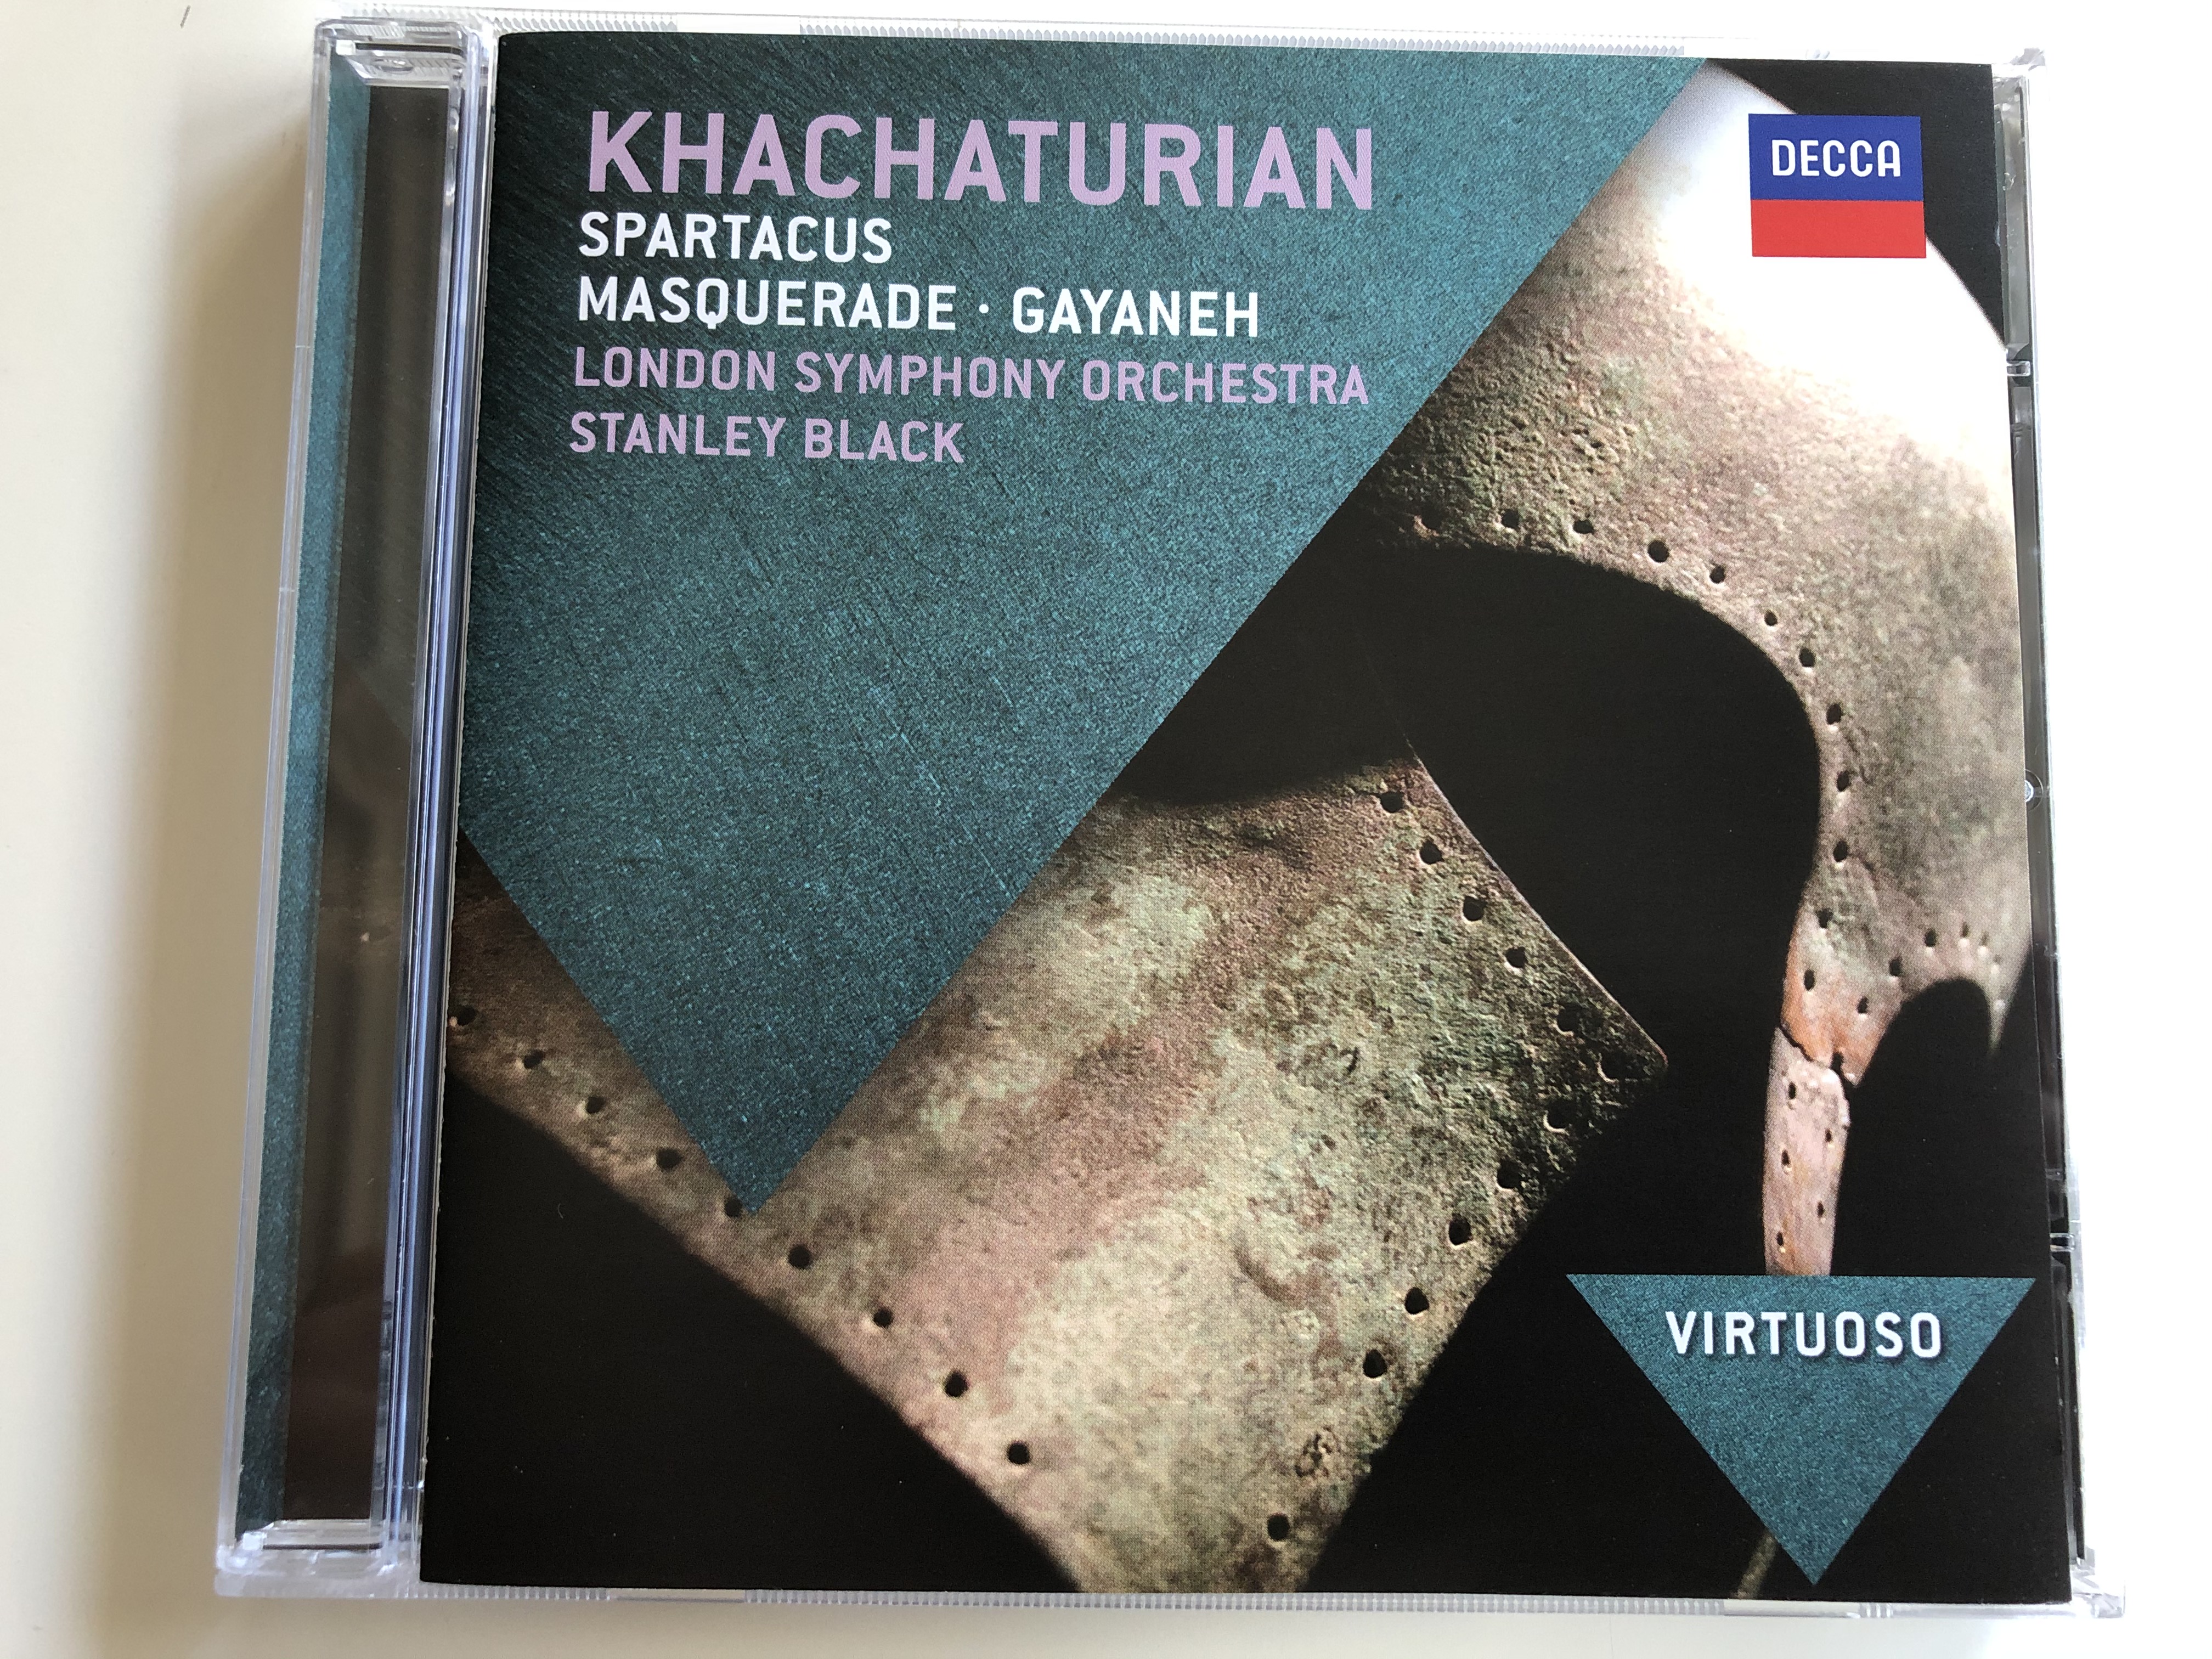 khachaturian-spartacus-masquerade-gayaneh-london-symphony-orchestra-stanley-black-virtuoso-decca-audio-cd-2016-483-0393-1-.jpg